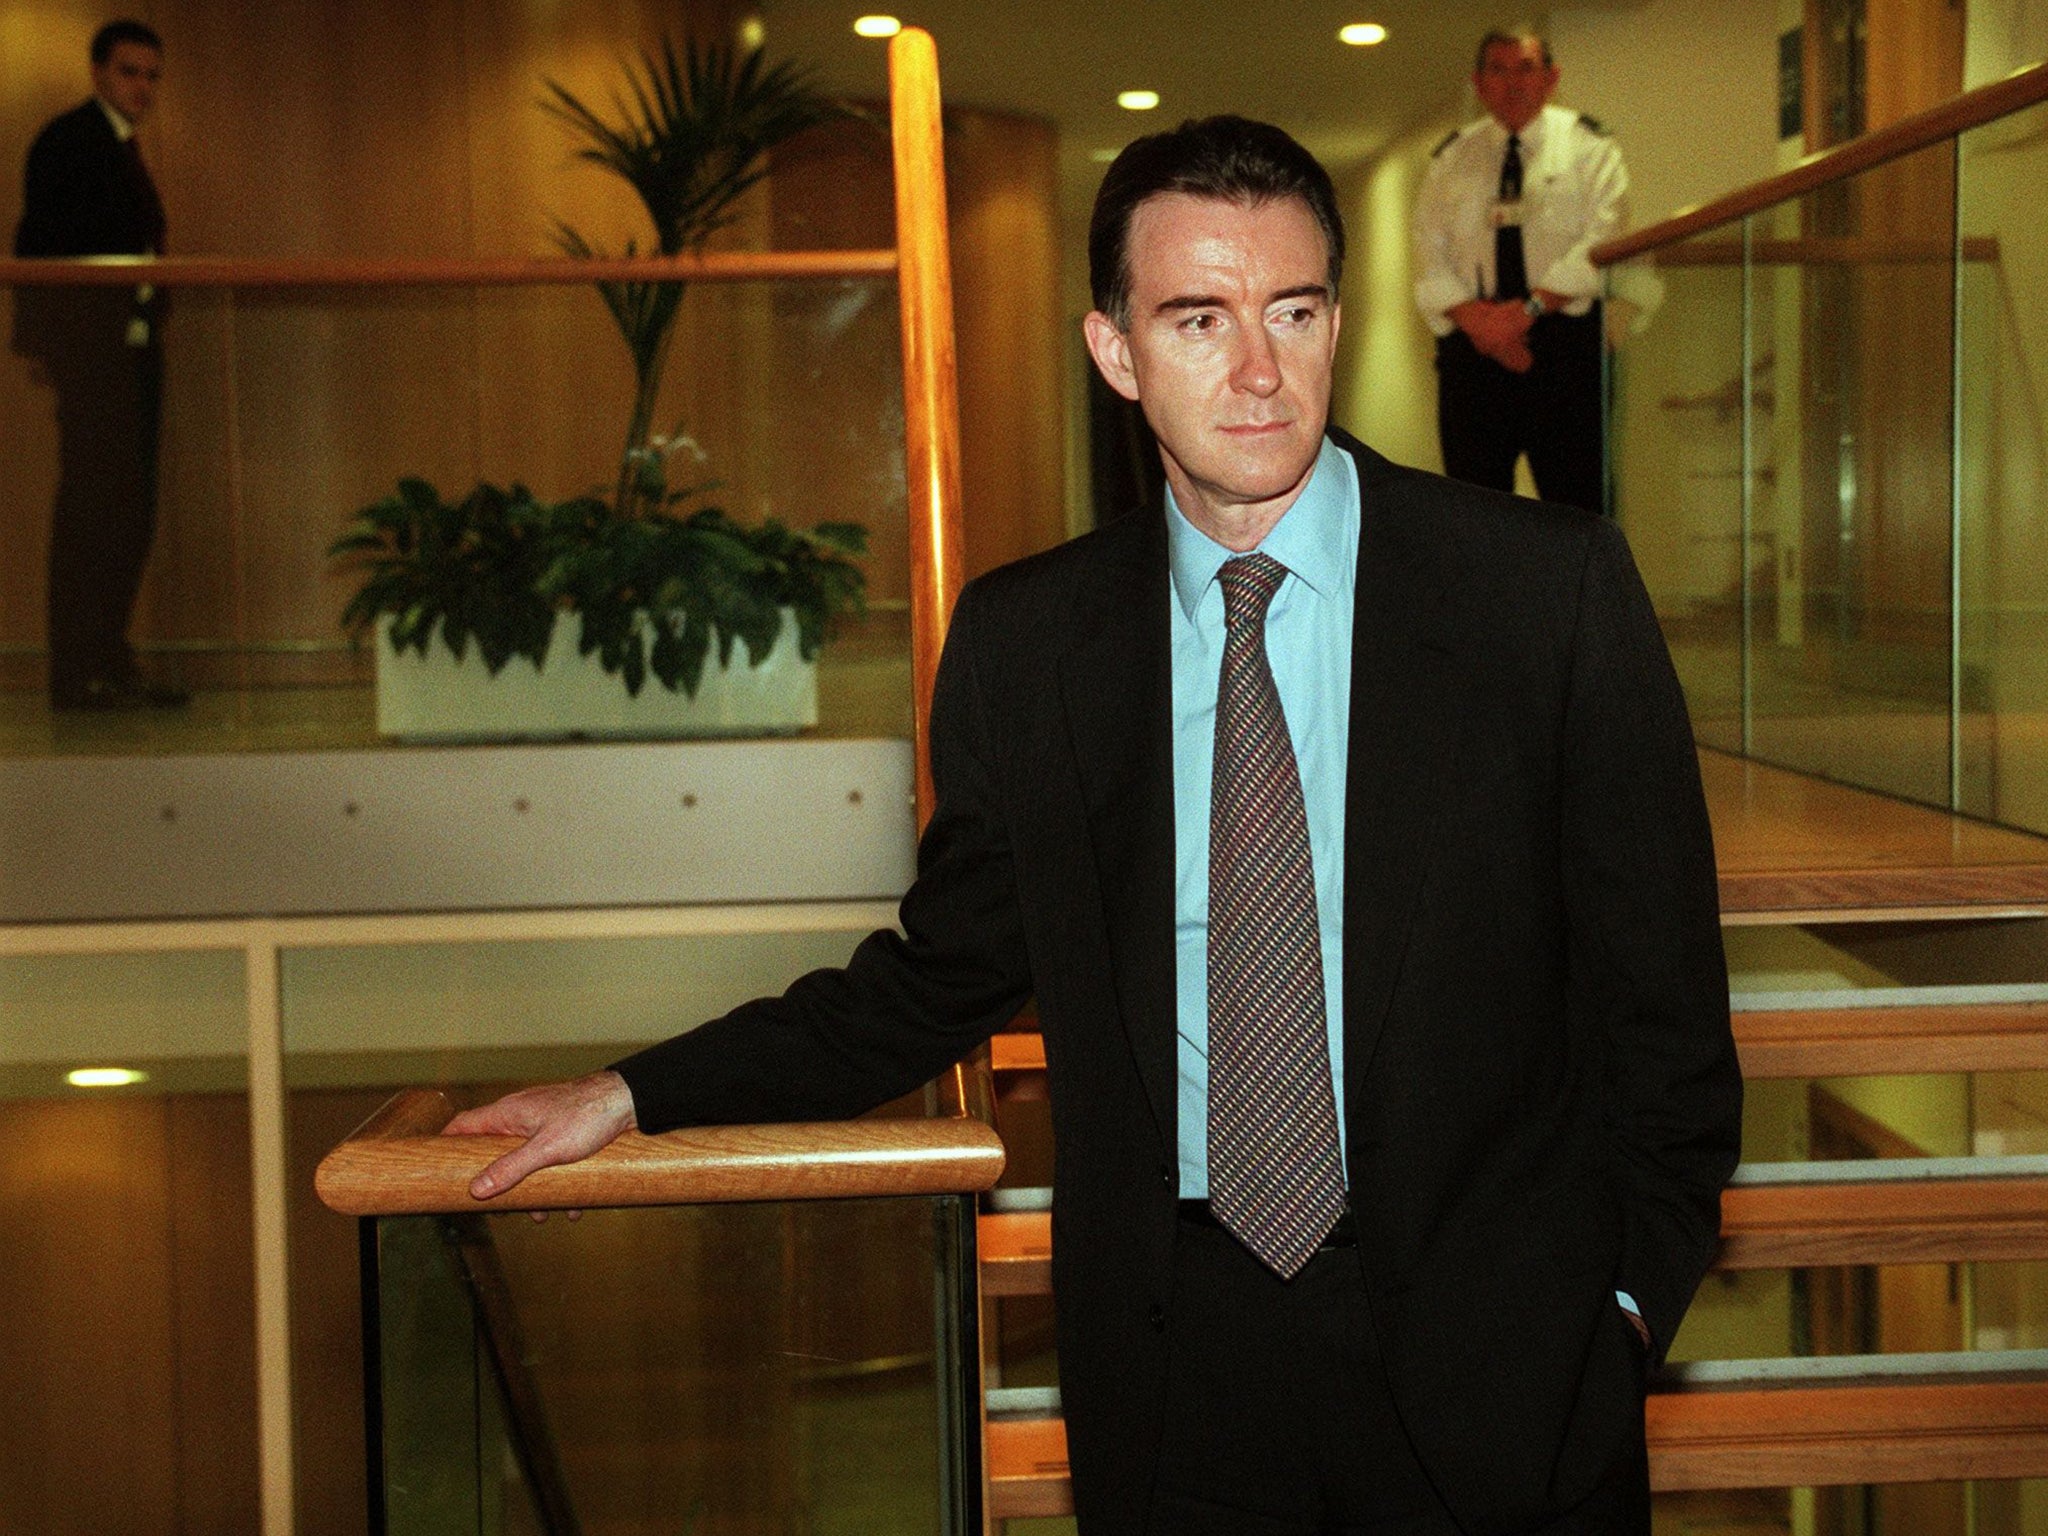 Peter Mandelson resigned as Trade Secretary in December 1998